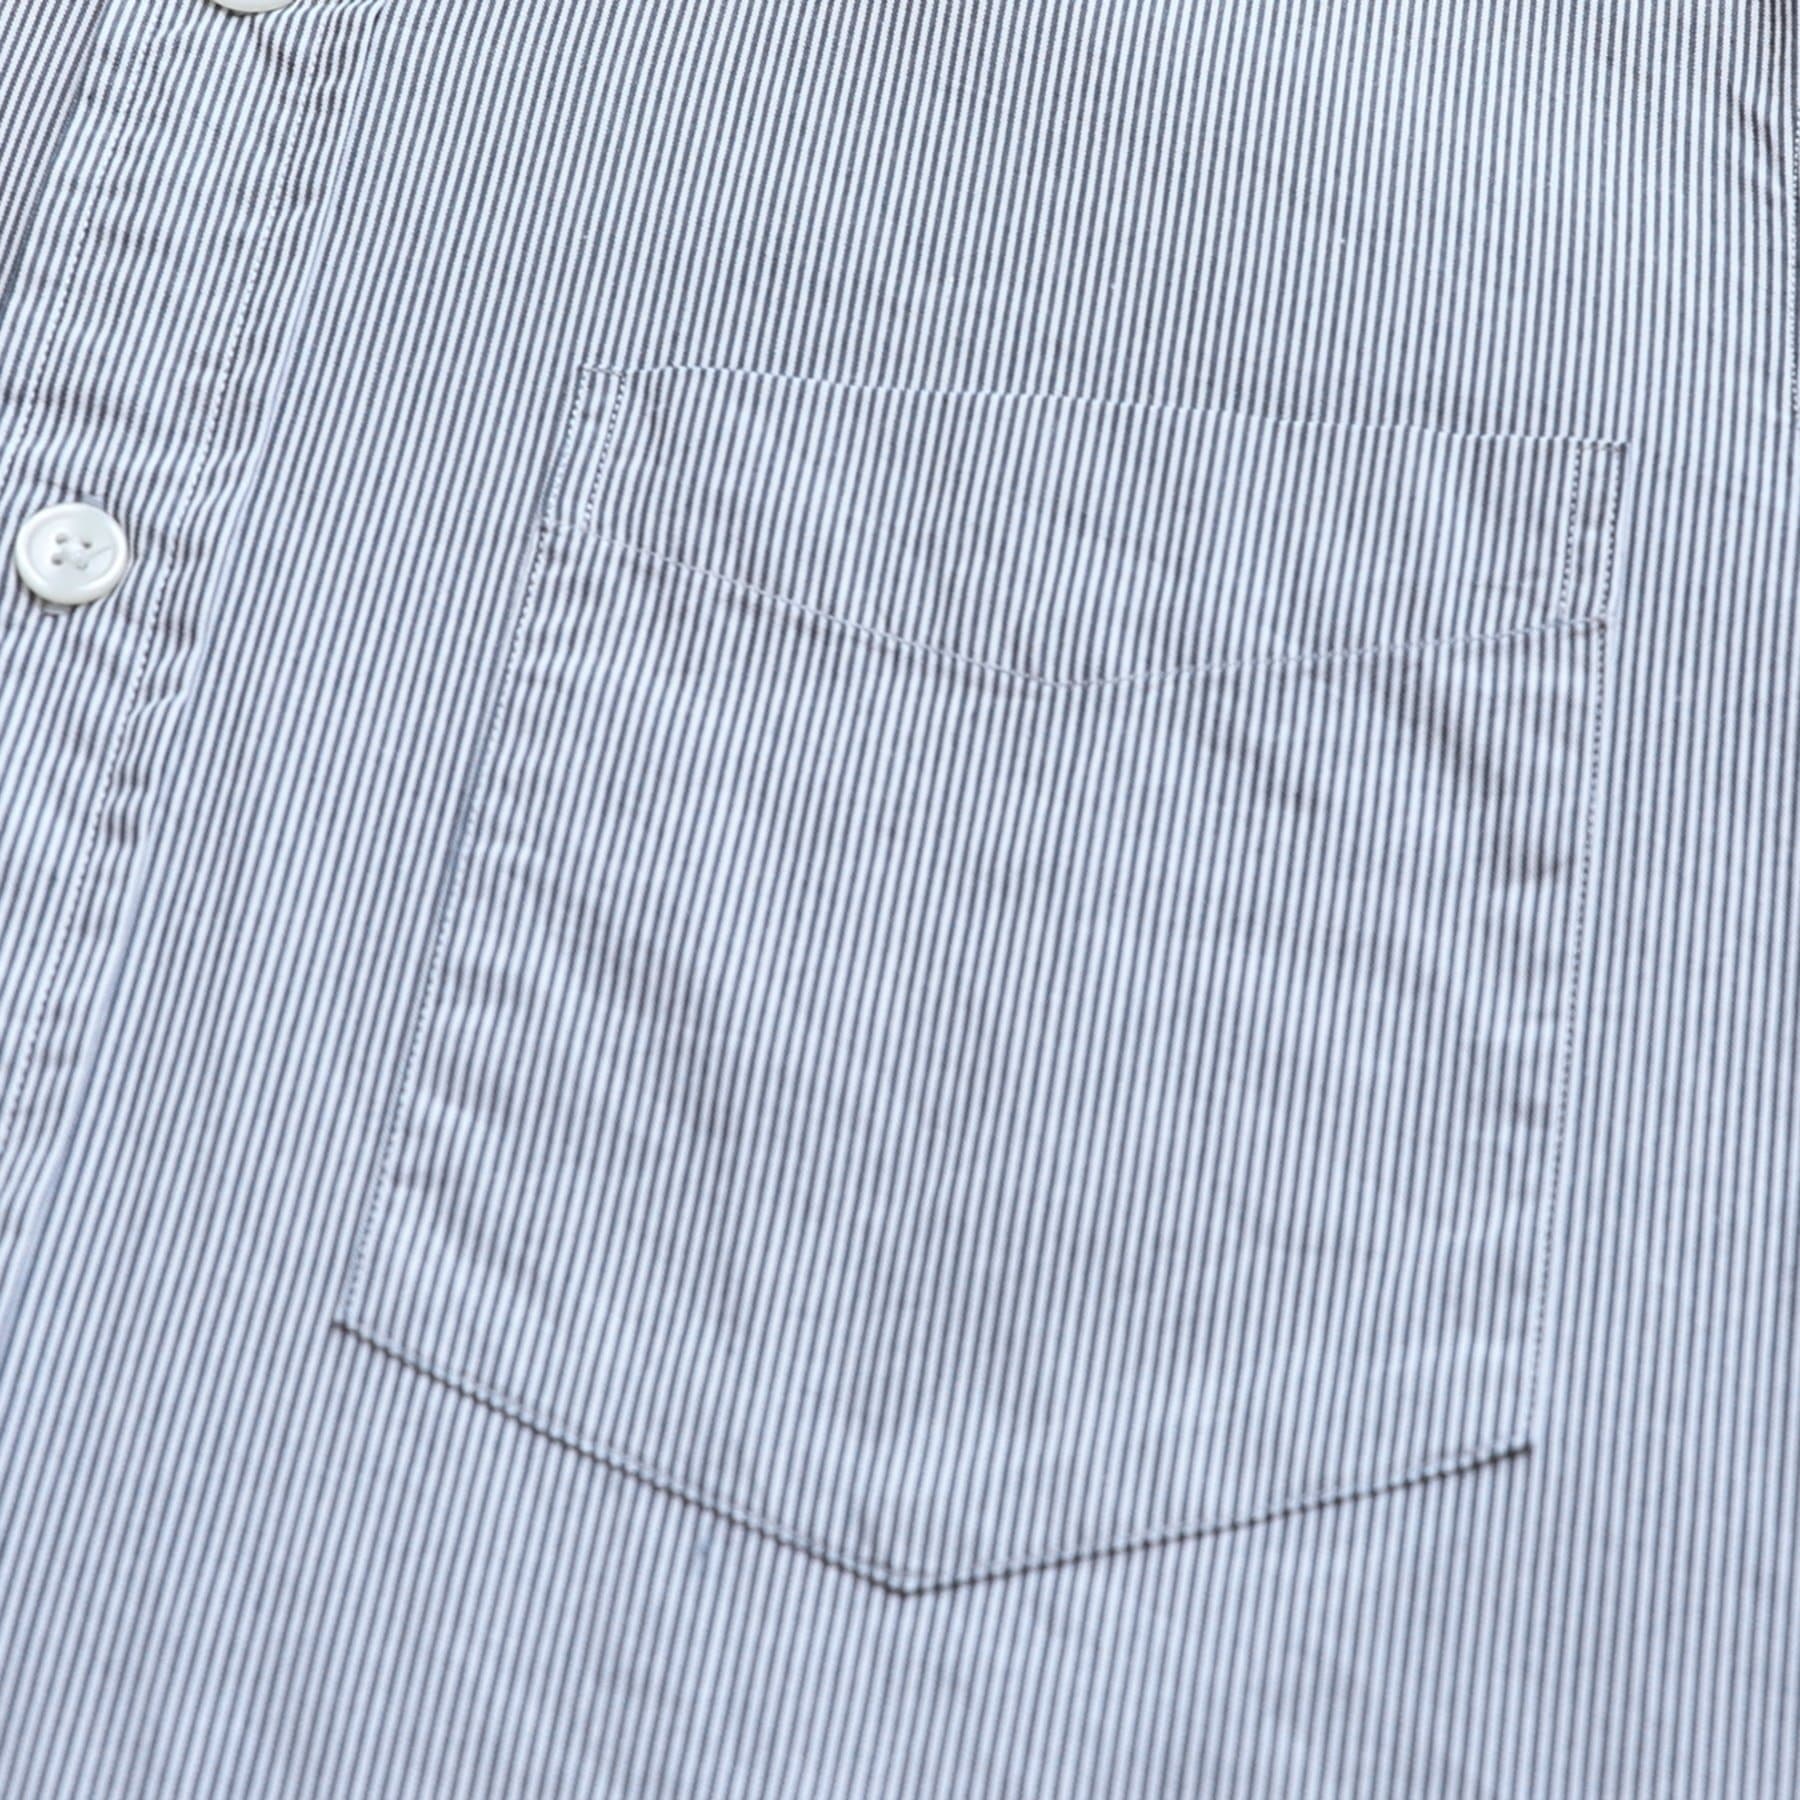 Men's casual short-sleeved cotton shirt #0105